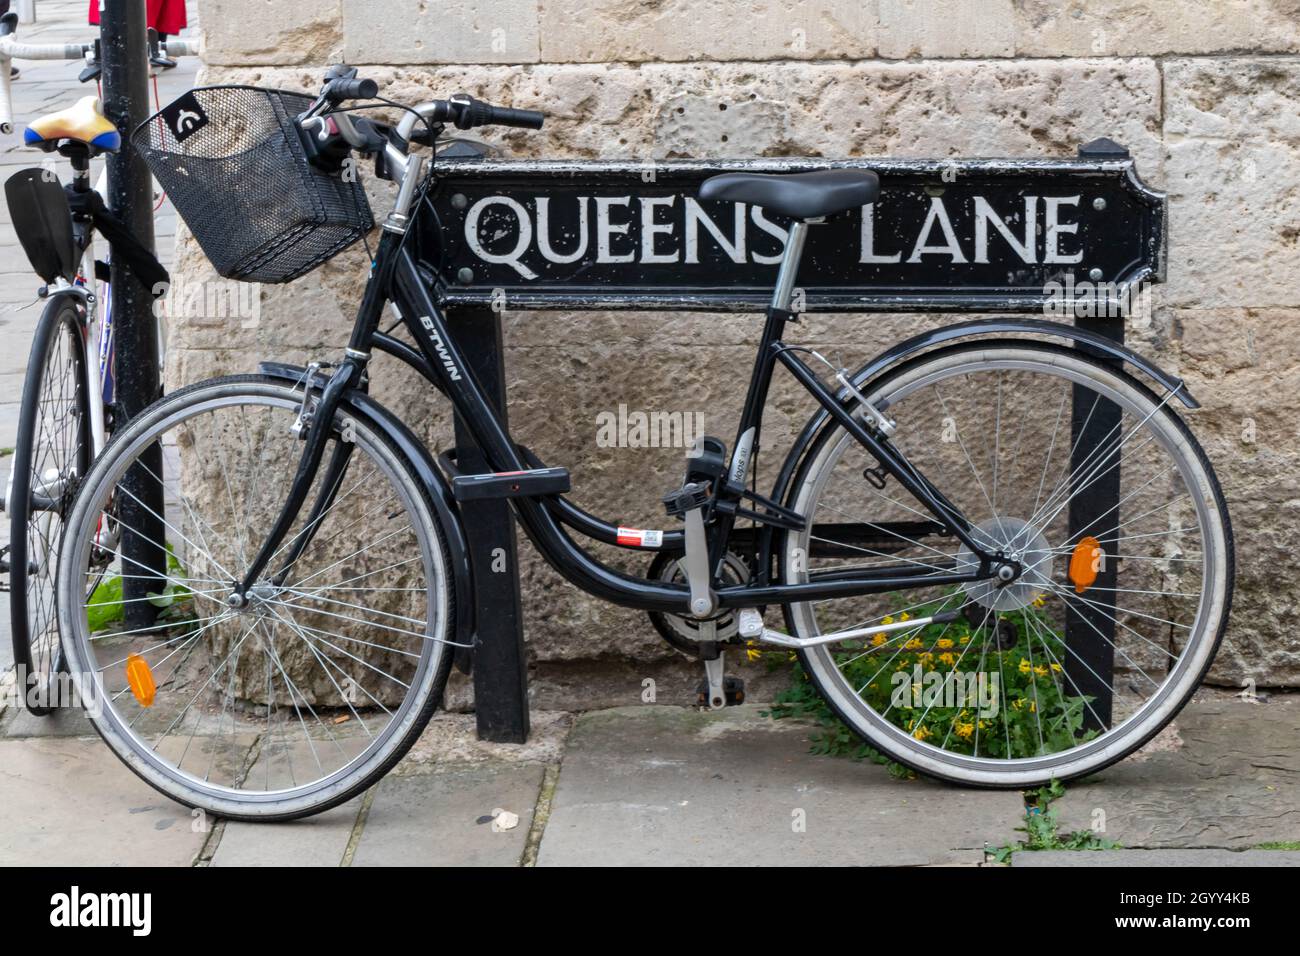 Bicicleta cerrada a la señal de Queen's Lane, Oxford, Inglaterra, Reino Unido Foto de stock